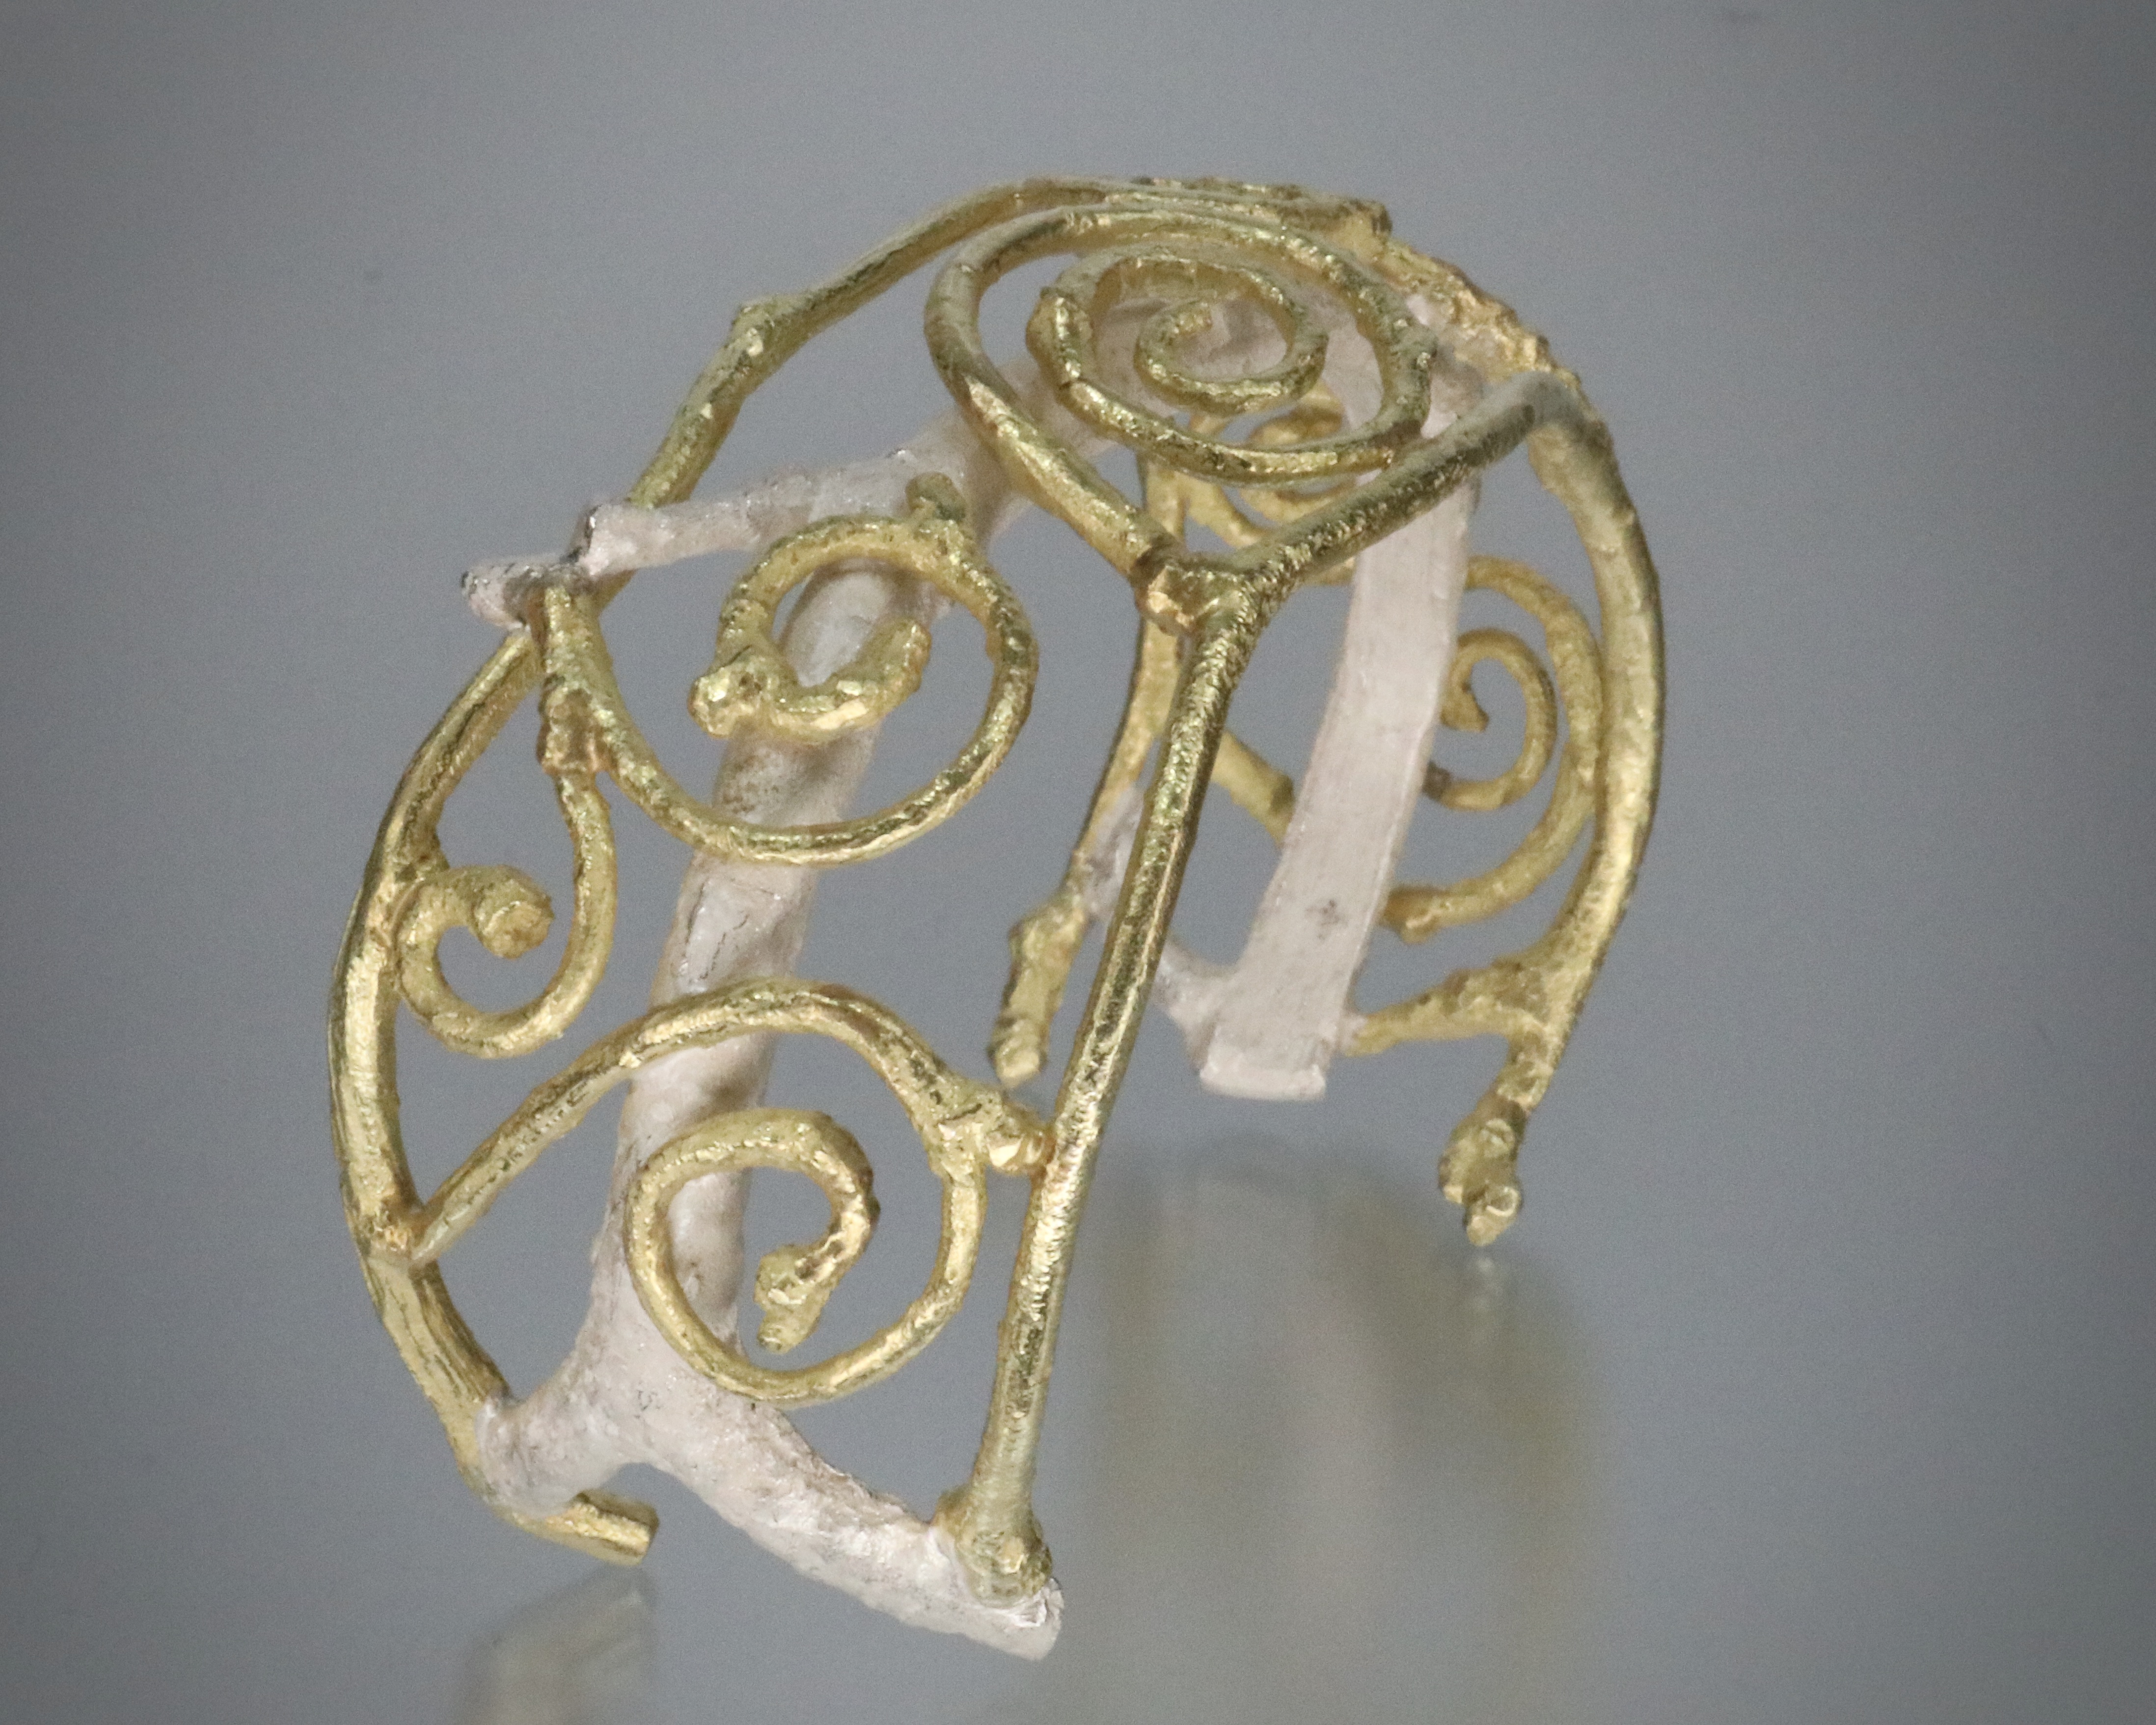 Spiral cuff with silver